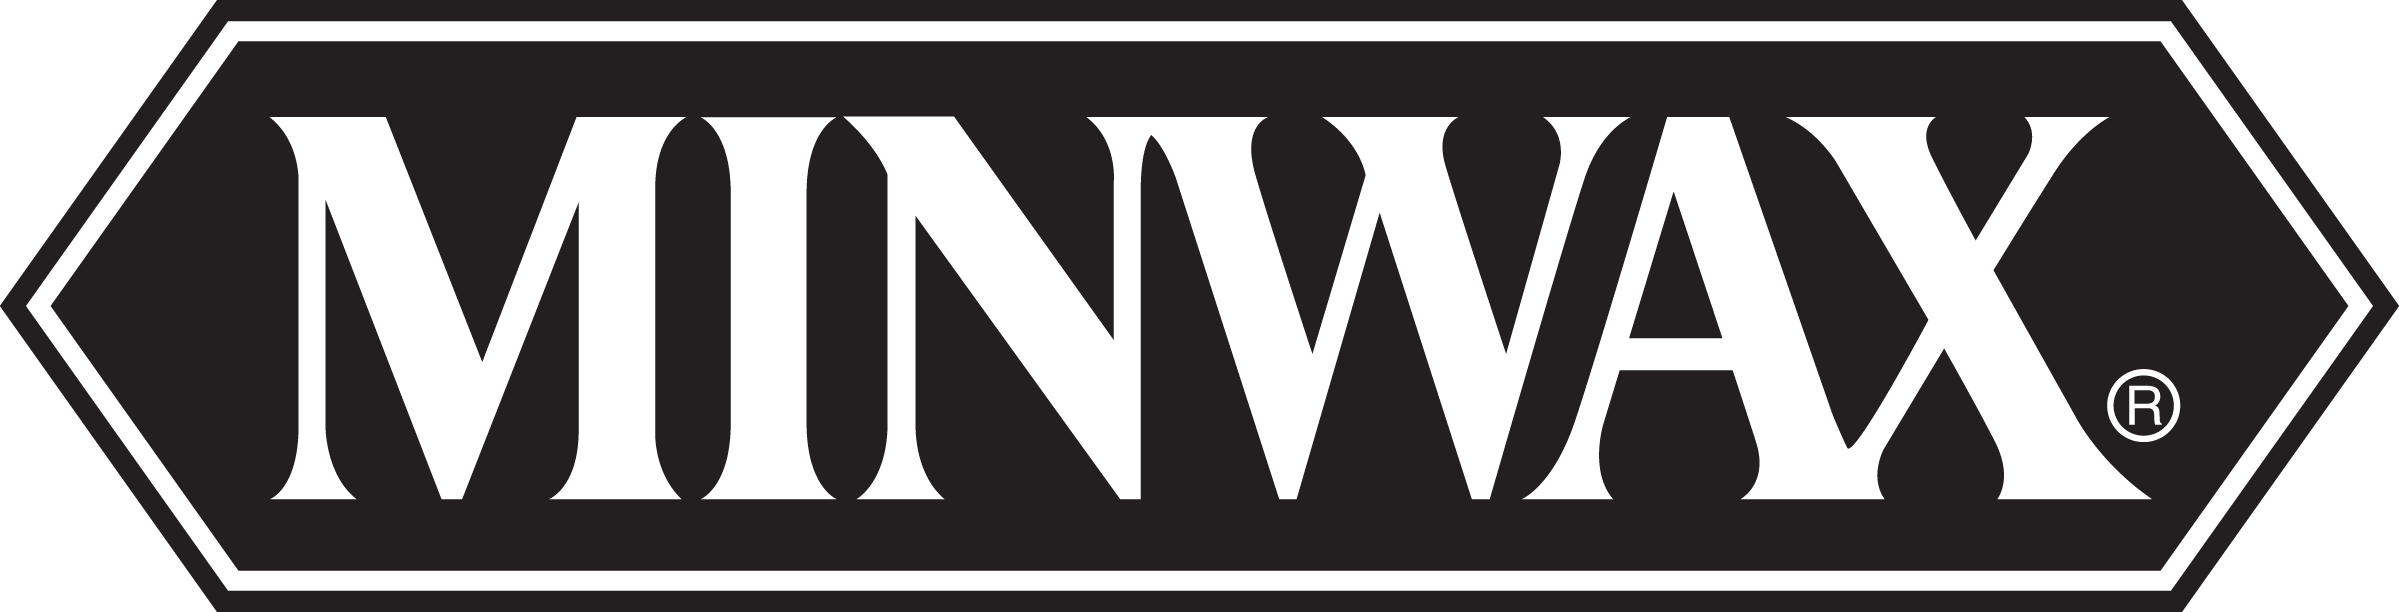 Minwax Logo - Soo Mill Minwax Logo February 14, 2019